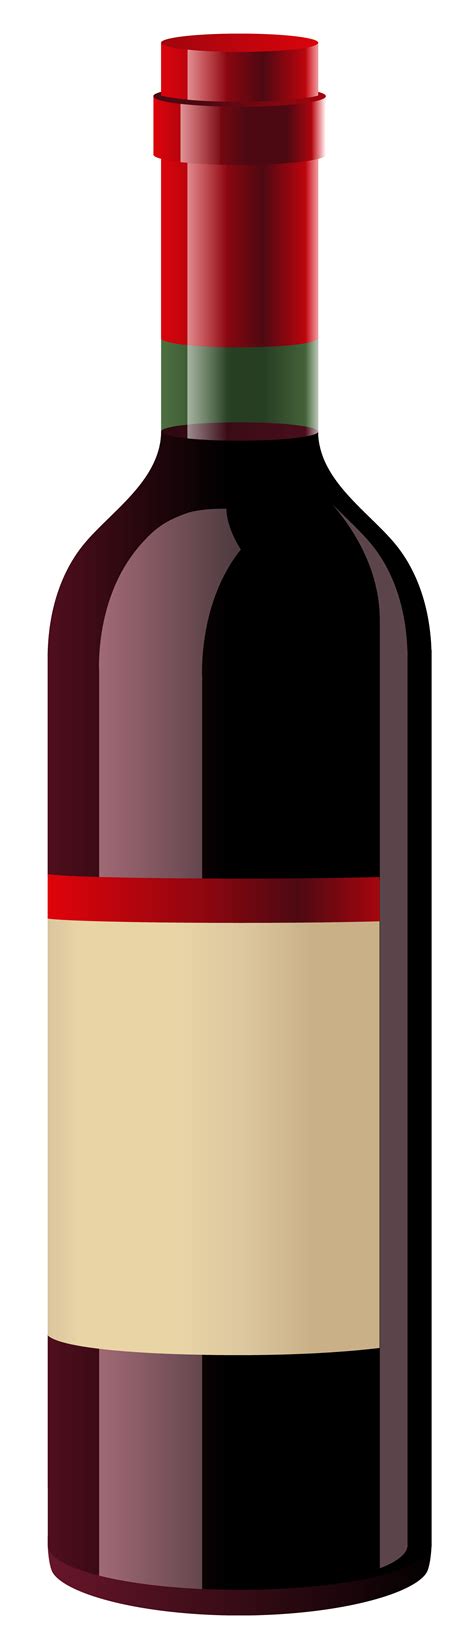 Wine Bottle Clipart Clipground